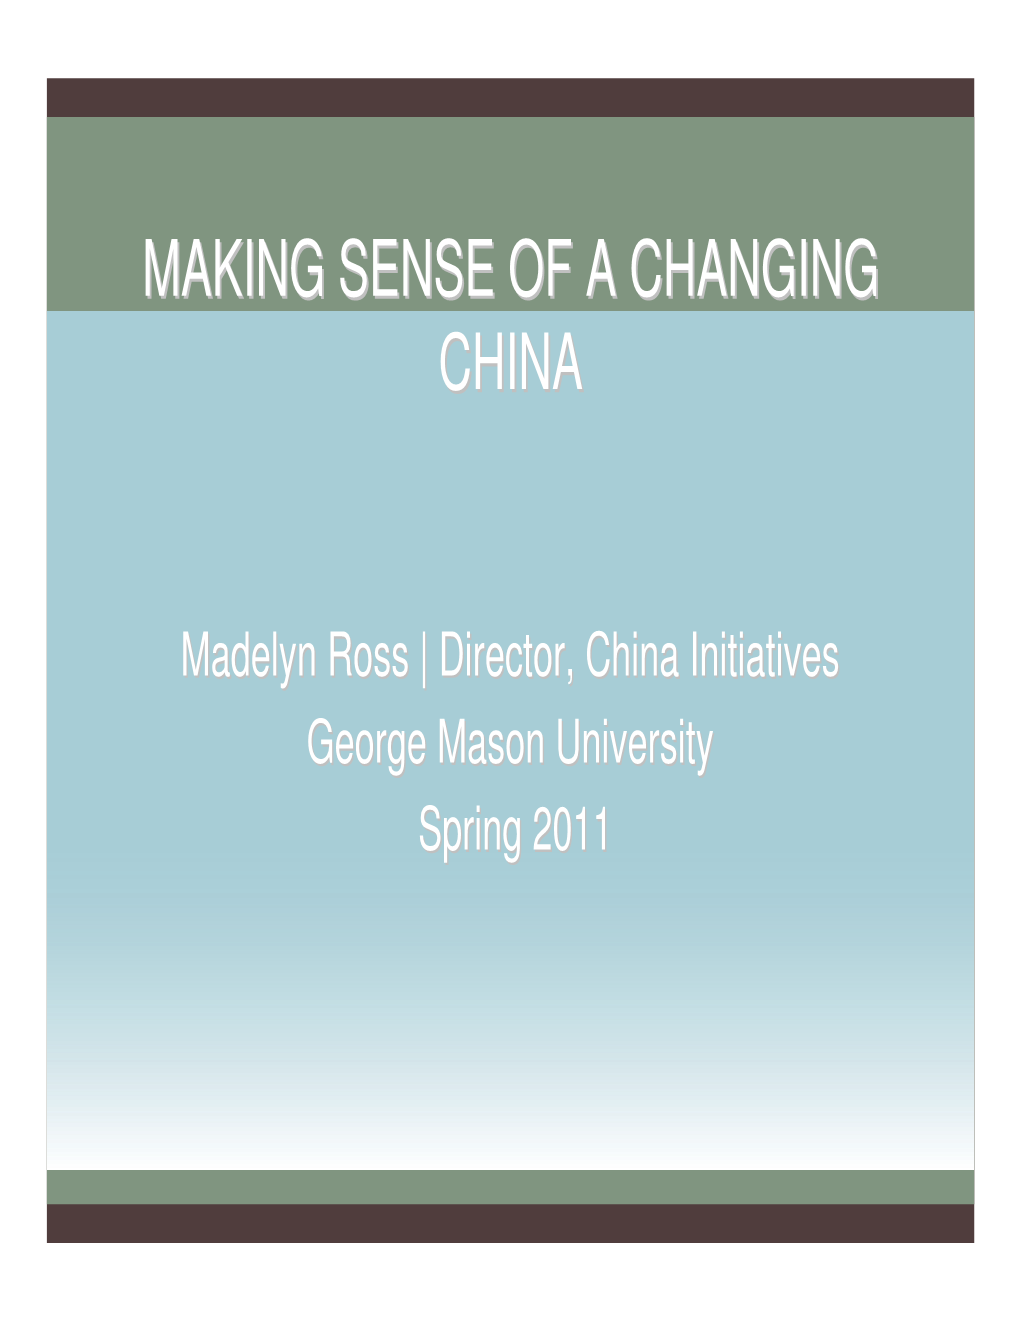 Making Sense of a Changing China